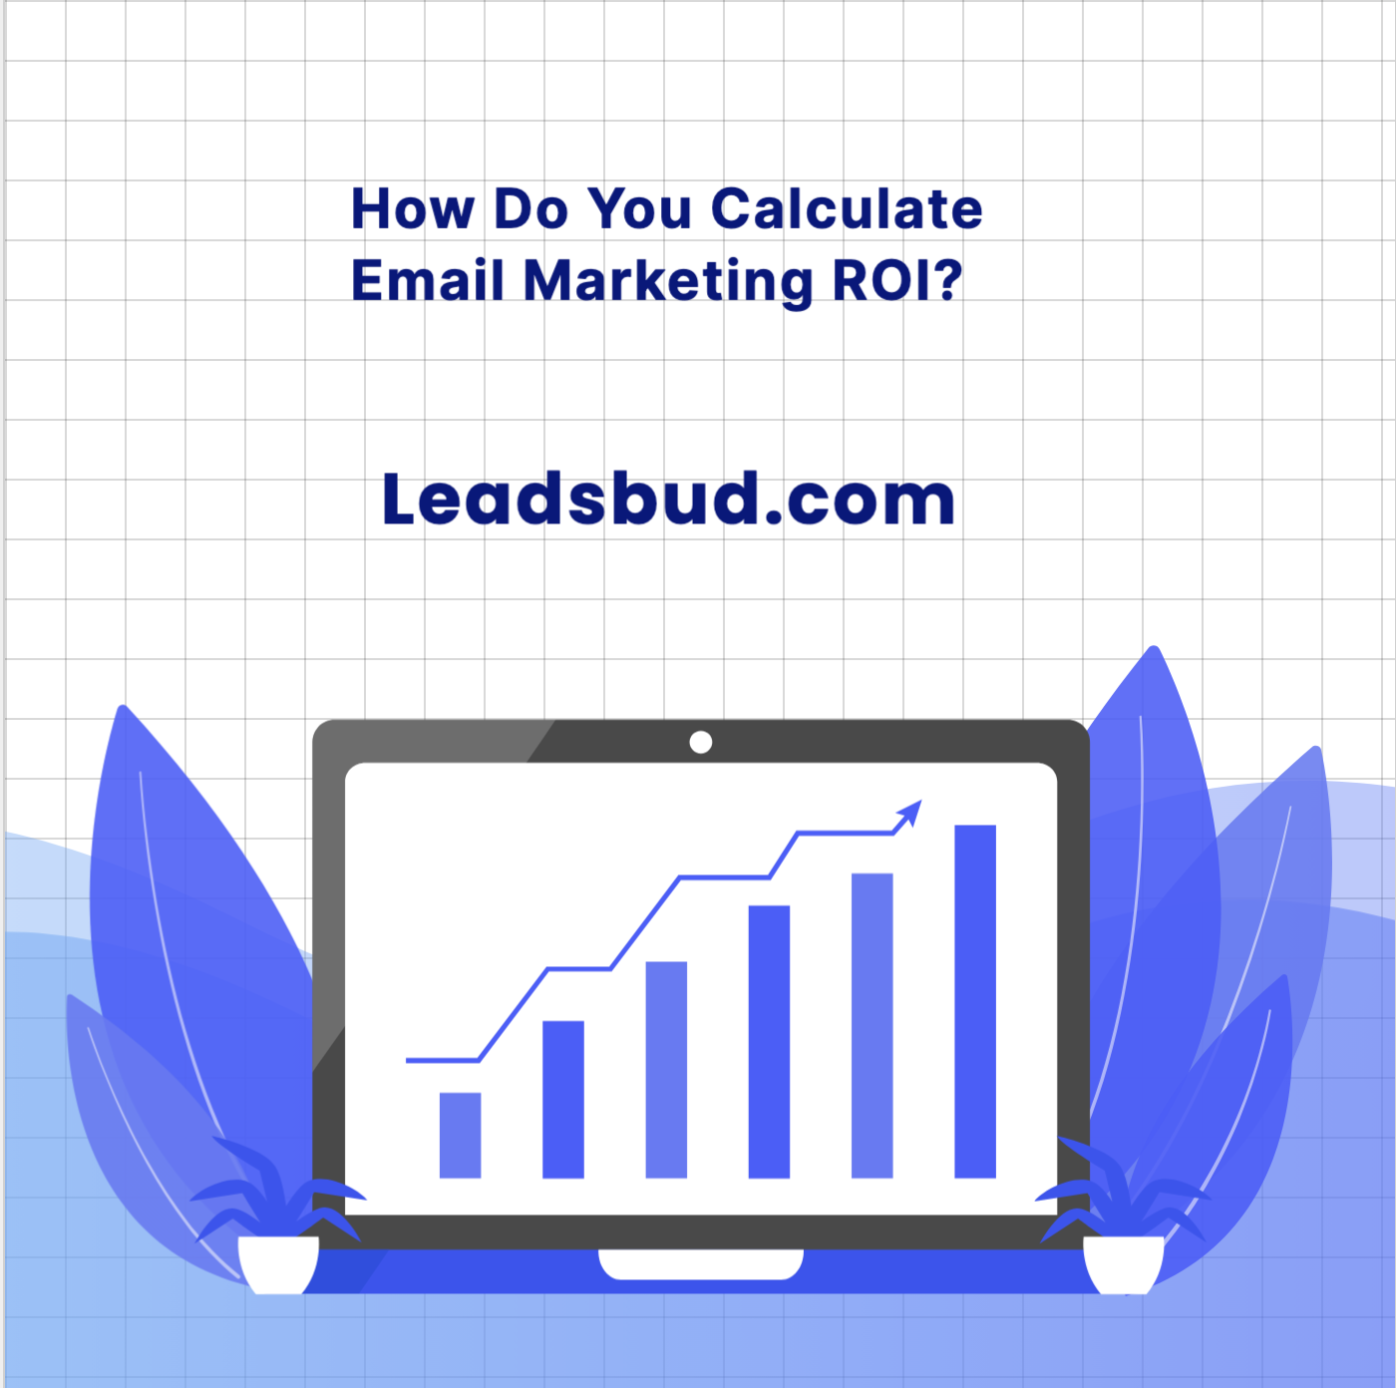 How Do You Calculate Email Marketing ROI?